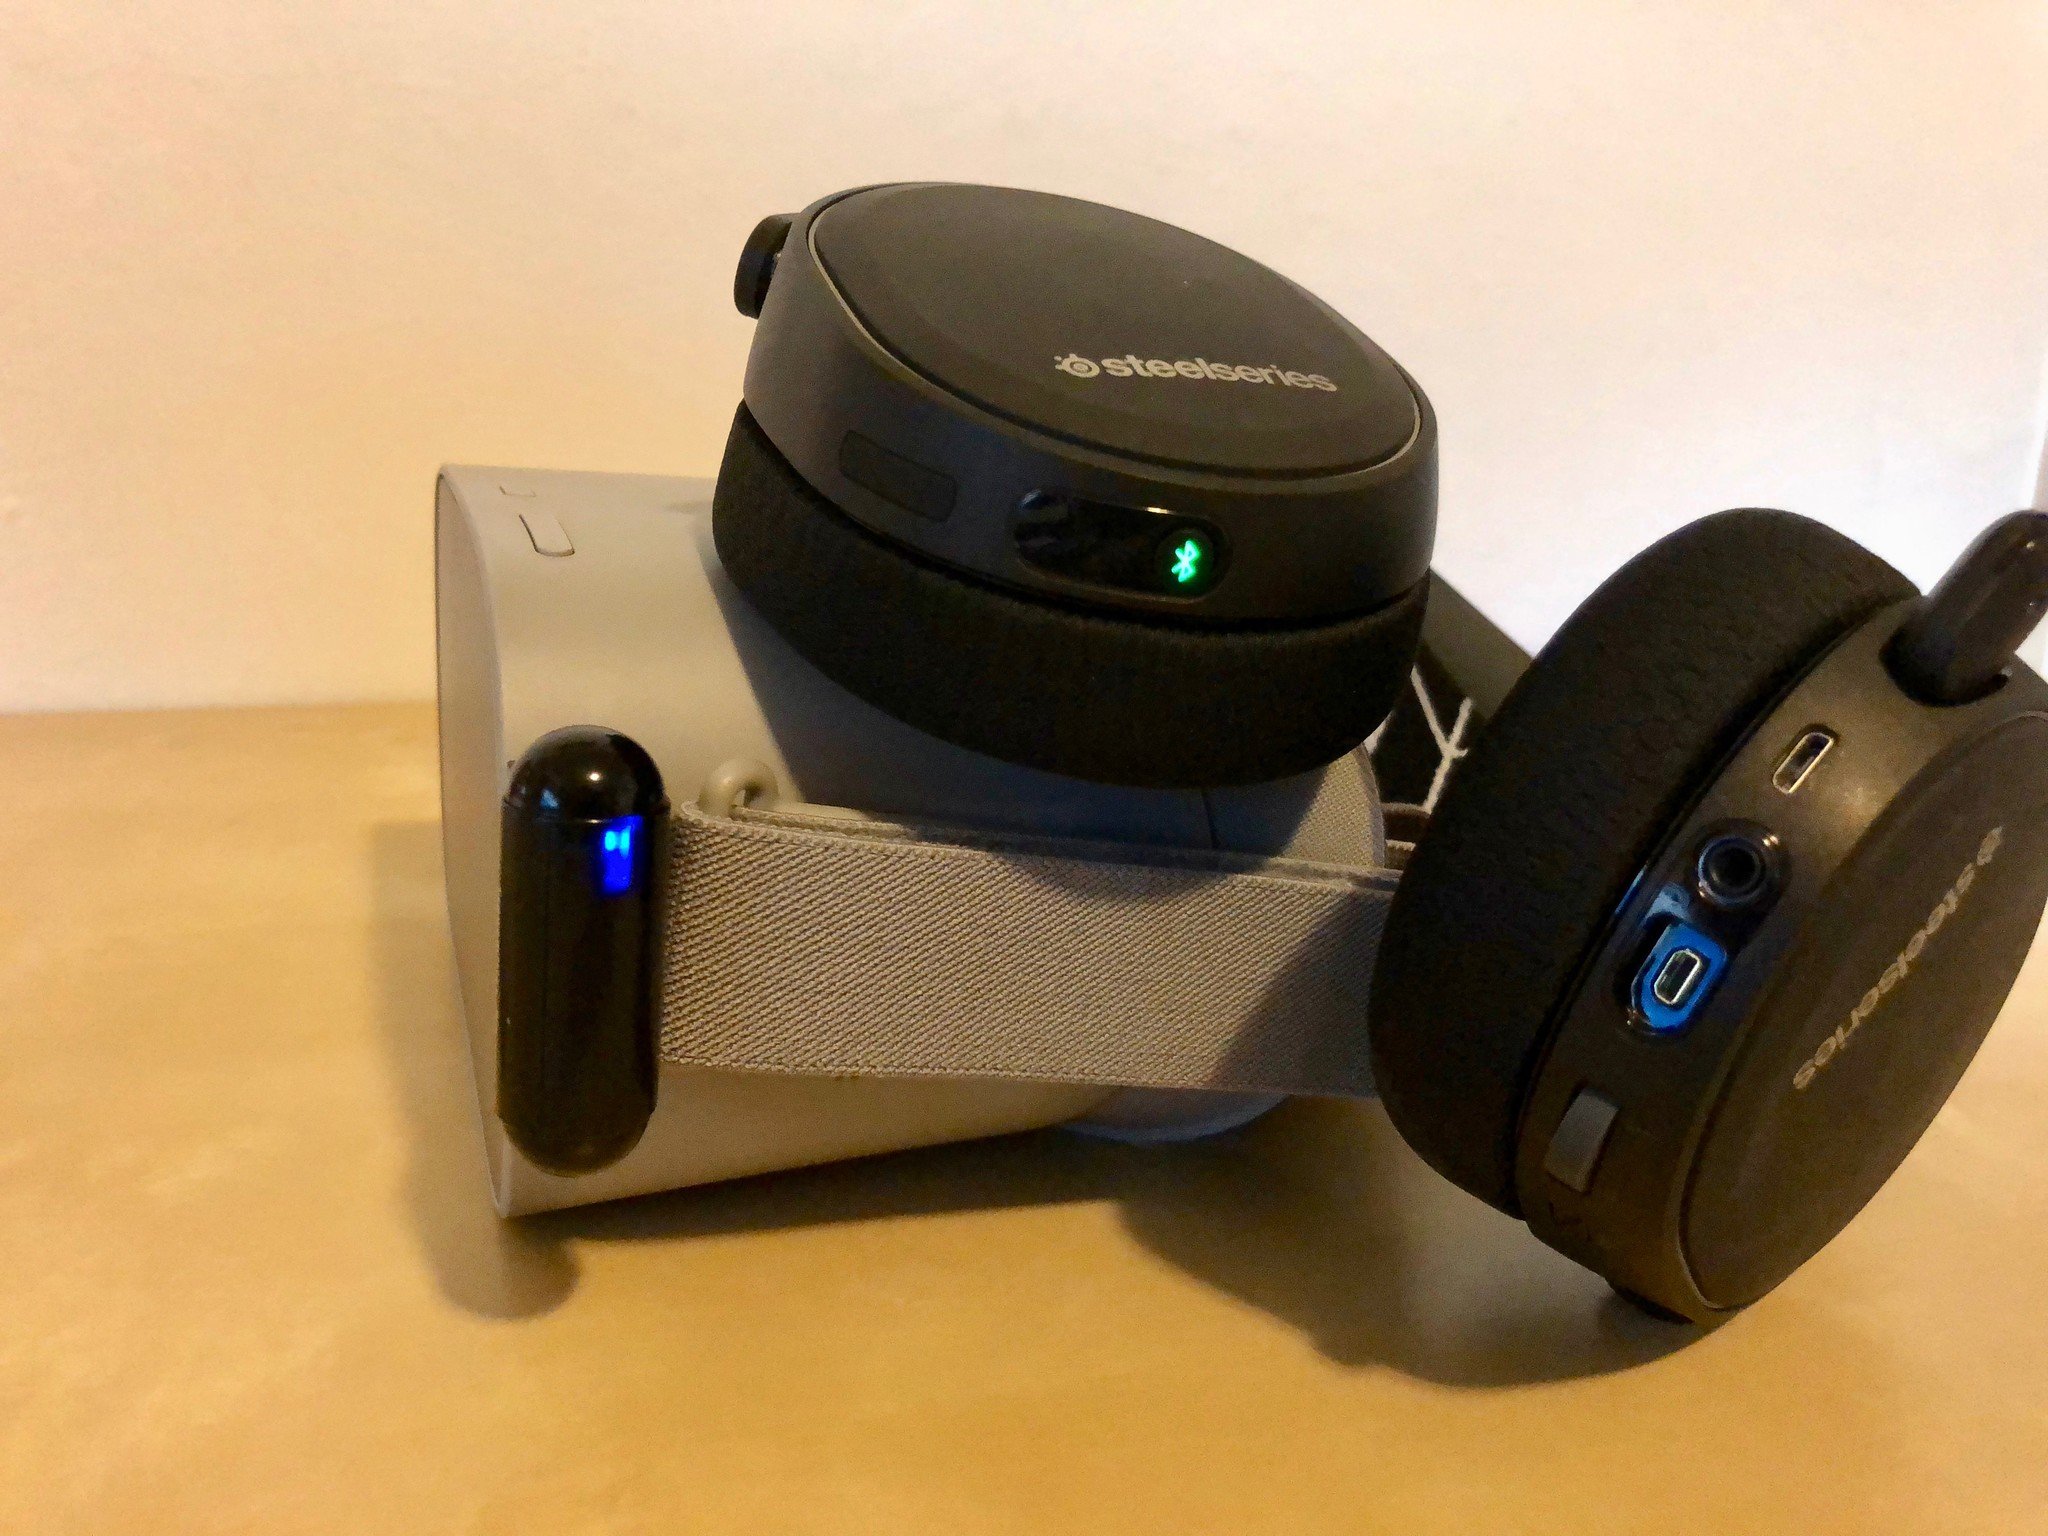 Oculus Go with Bluetooth headphones